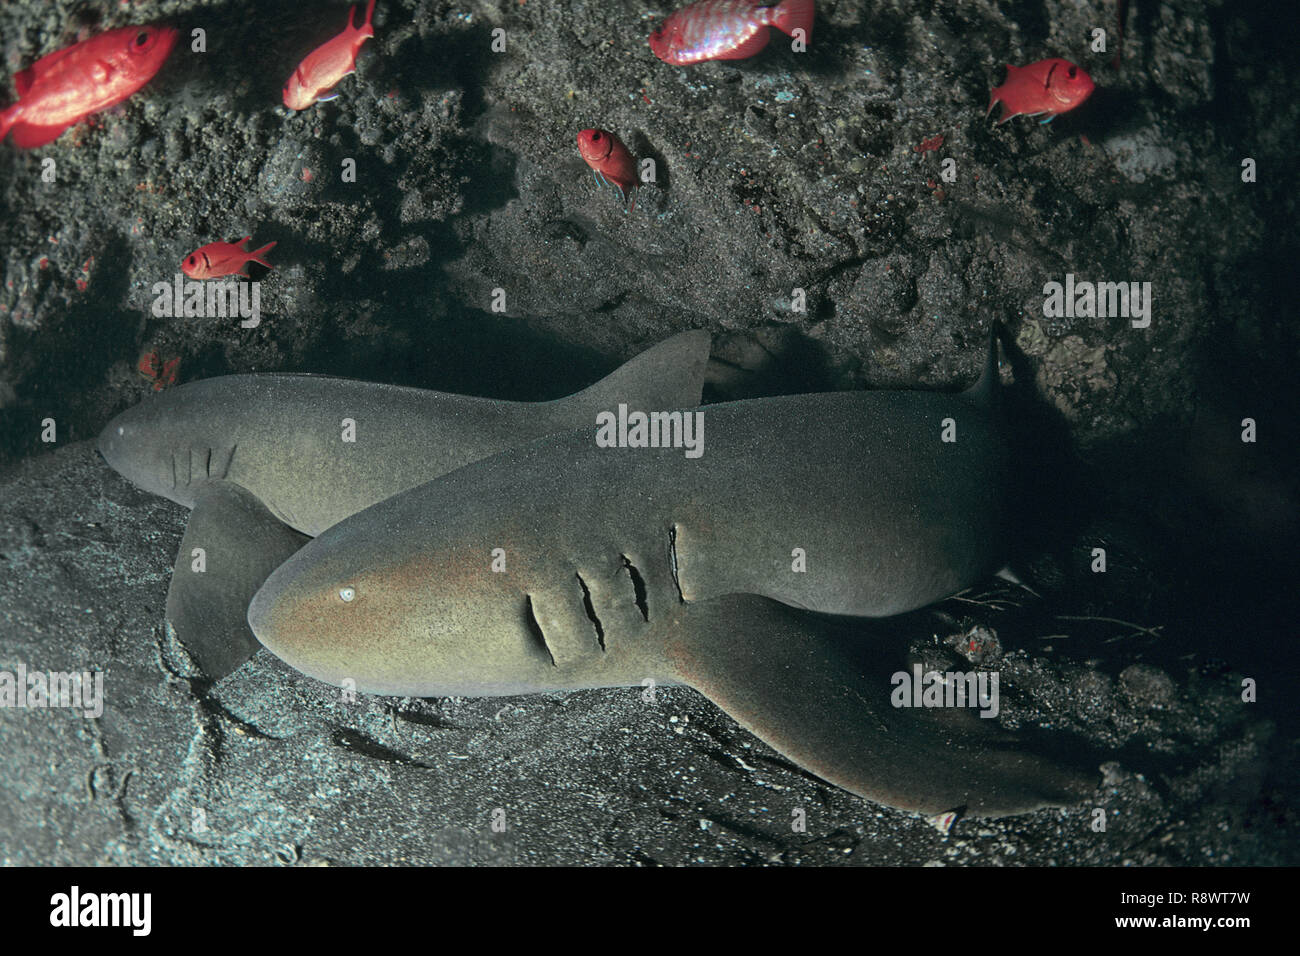 Deux requins nourrice (Ginglymostoma cirratum), dormir sous un surplomb, Grenade, Antilles, Caraïbes Banque D'Images